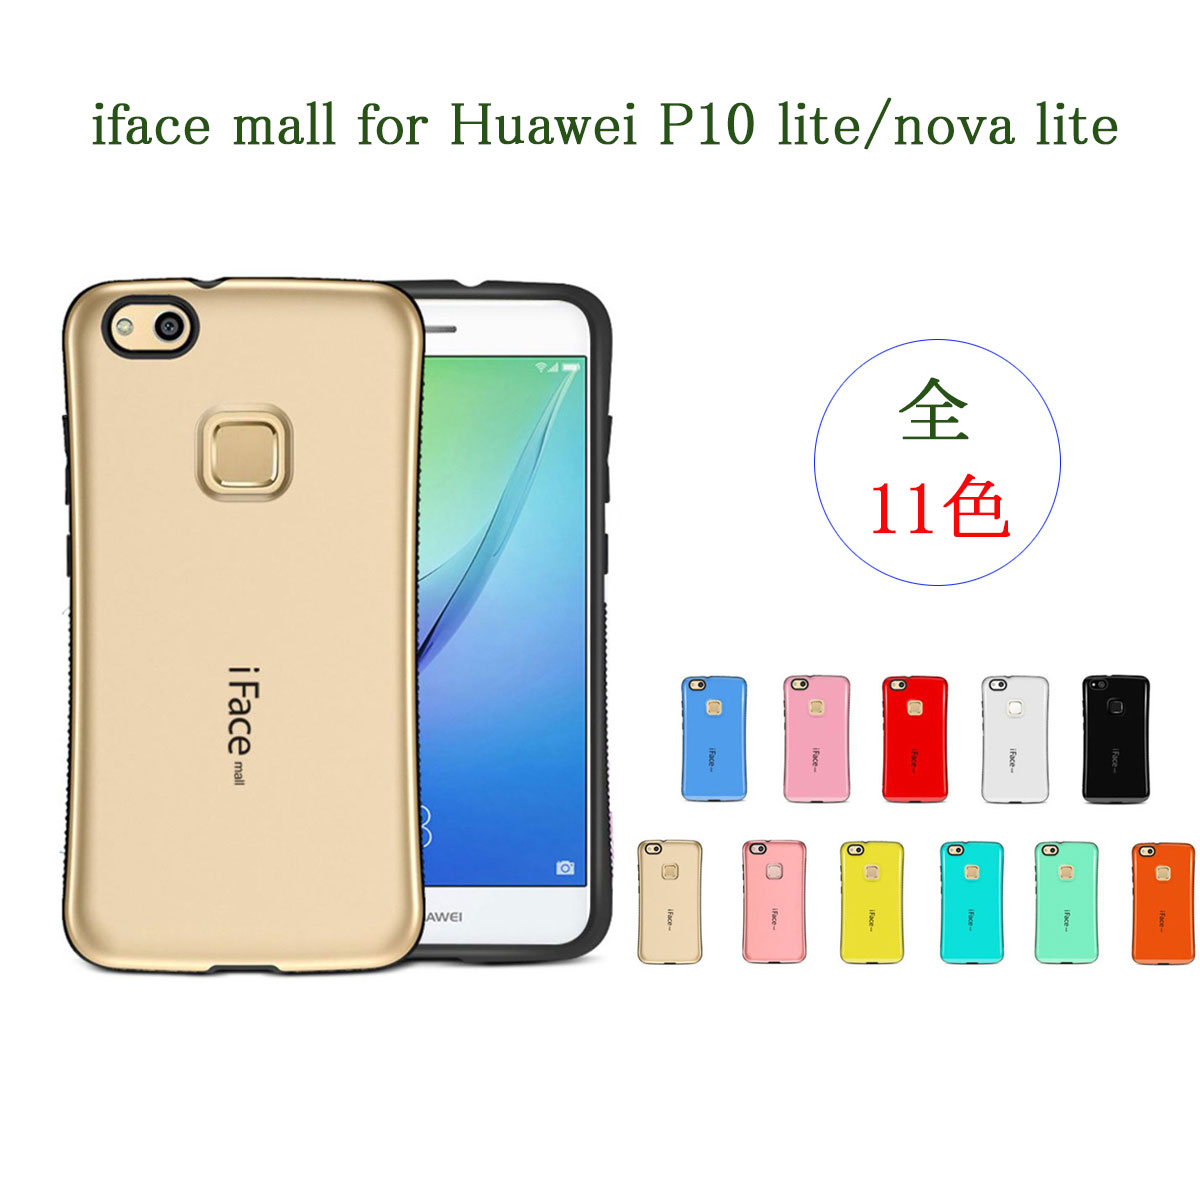  iFace mall Huawei P10 lite ケース Huawei nova lite ケース カバー Huawei P20 P20 lite P30 P30 lite P30 Pro mate 10 lite honor8 ファーウェイ P10ライト ハードケース novalite2 ファーウェイ ノバライト ケース